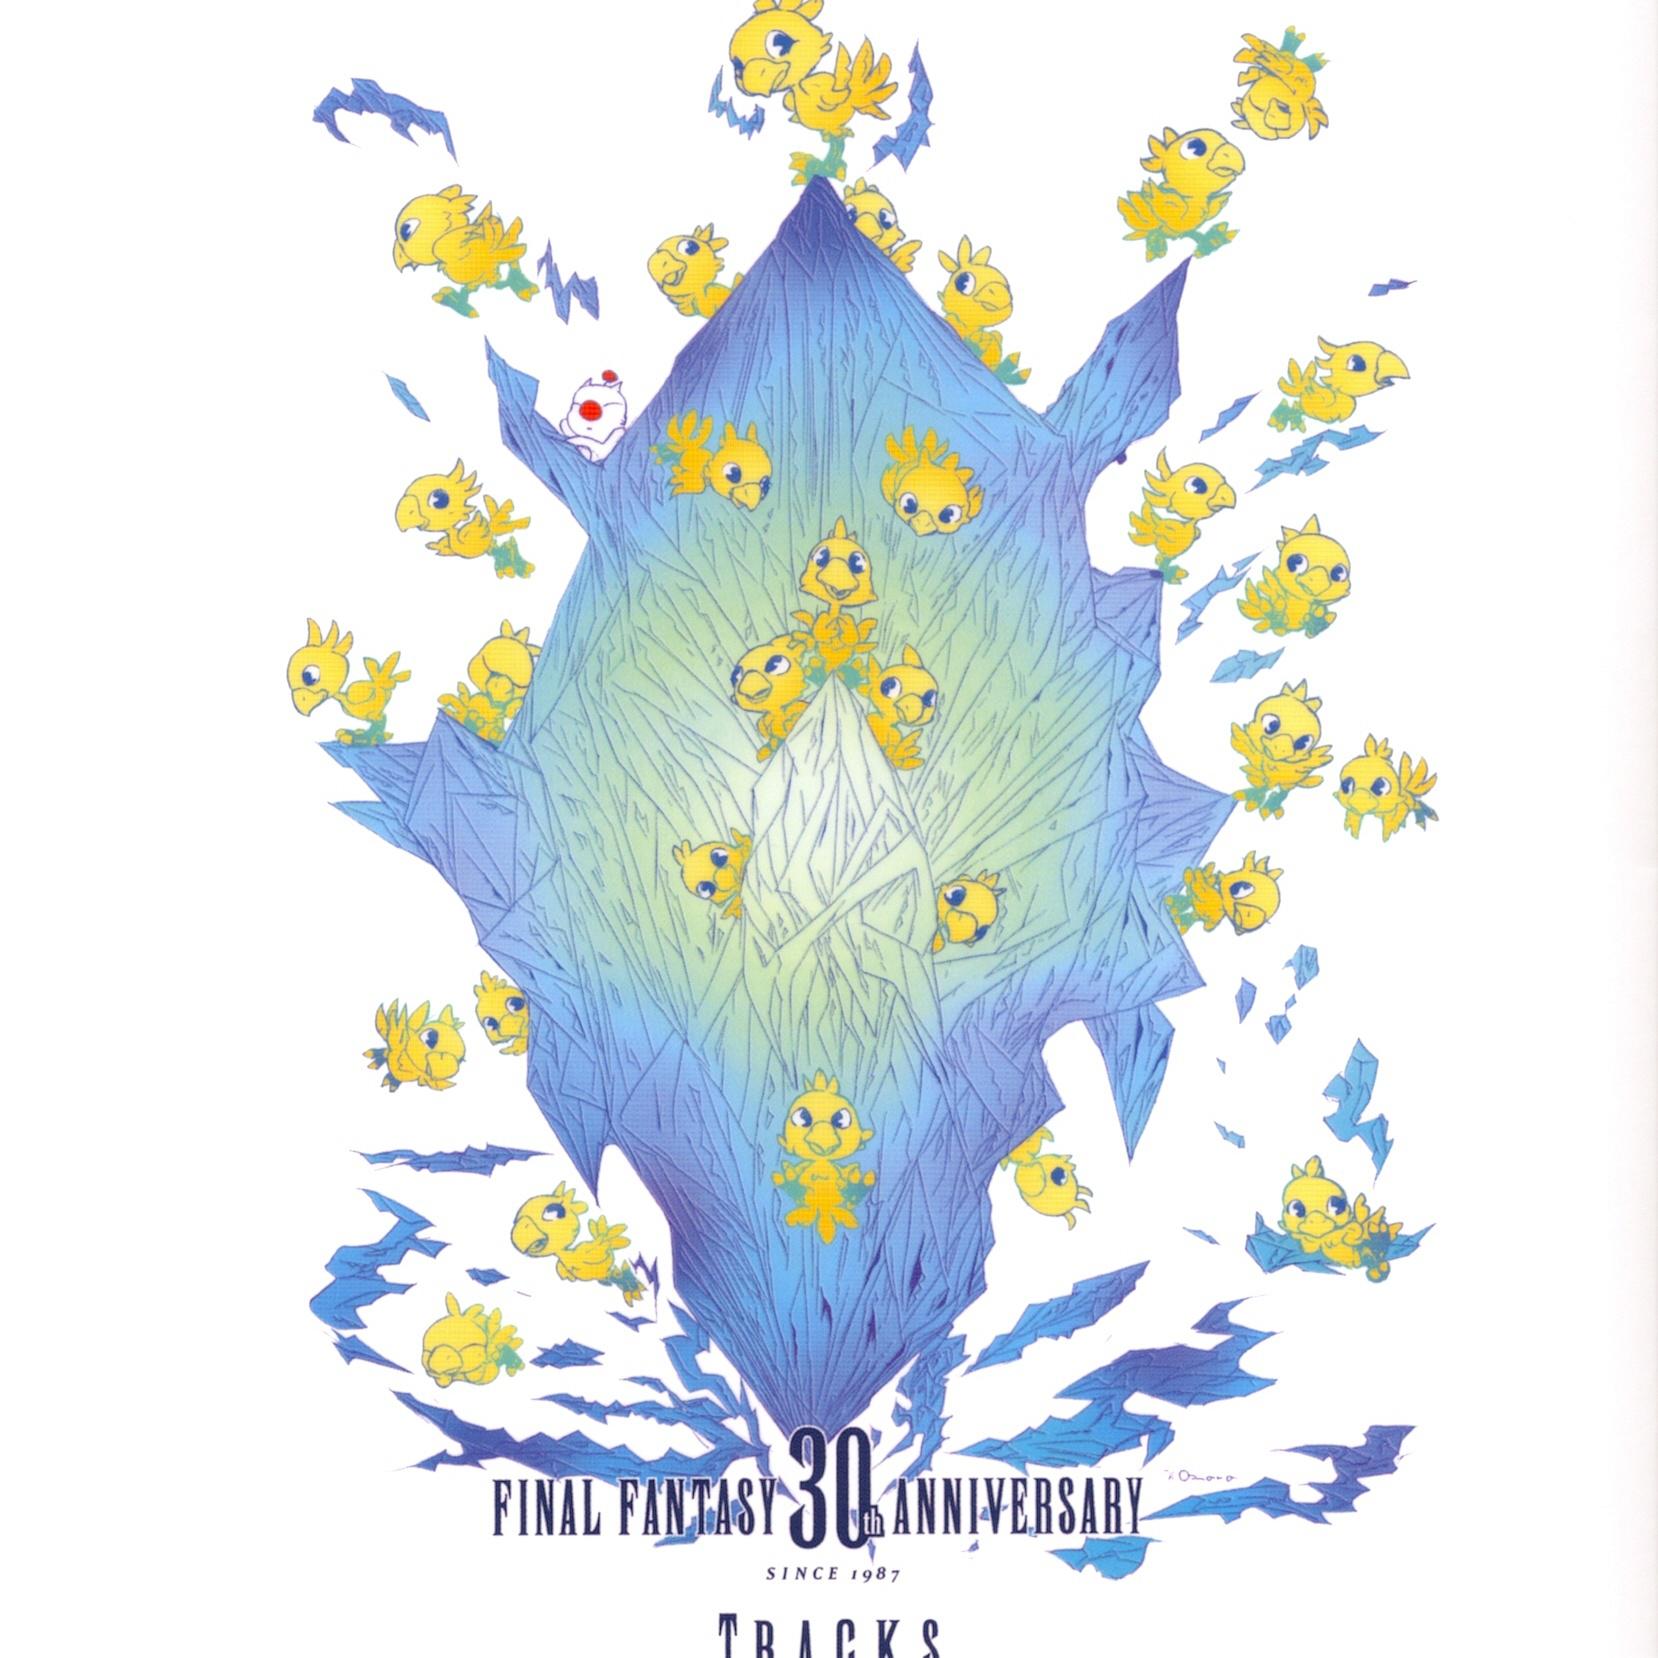 Final Fantasy 30th Anniversary Tracks 1987  2017